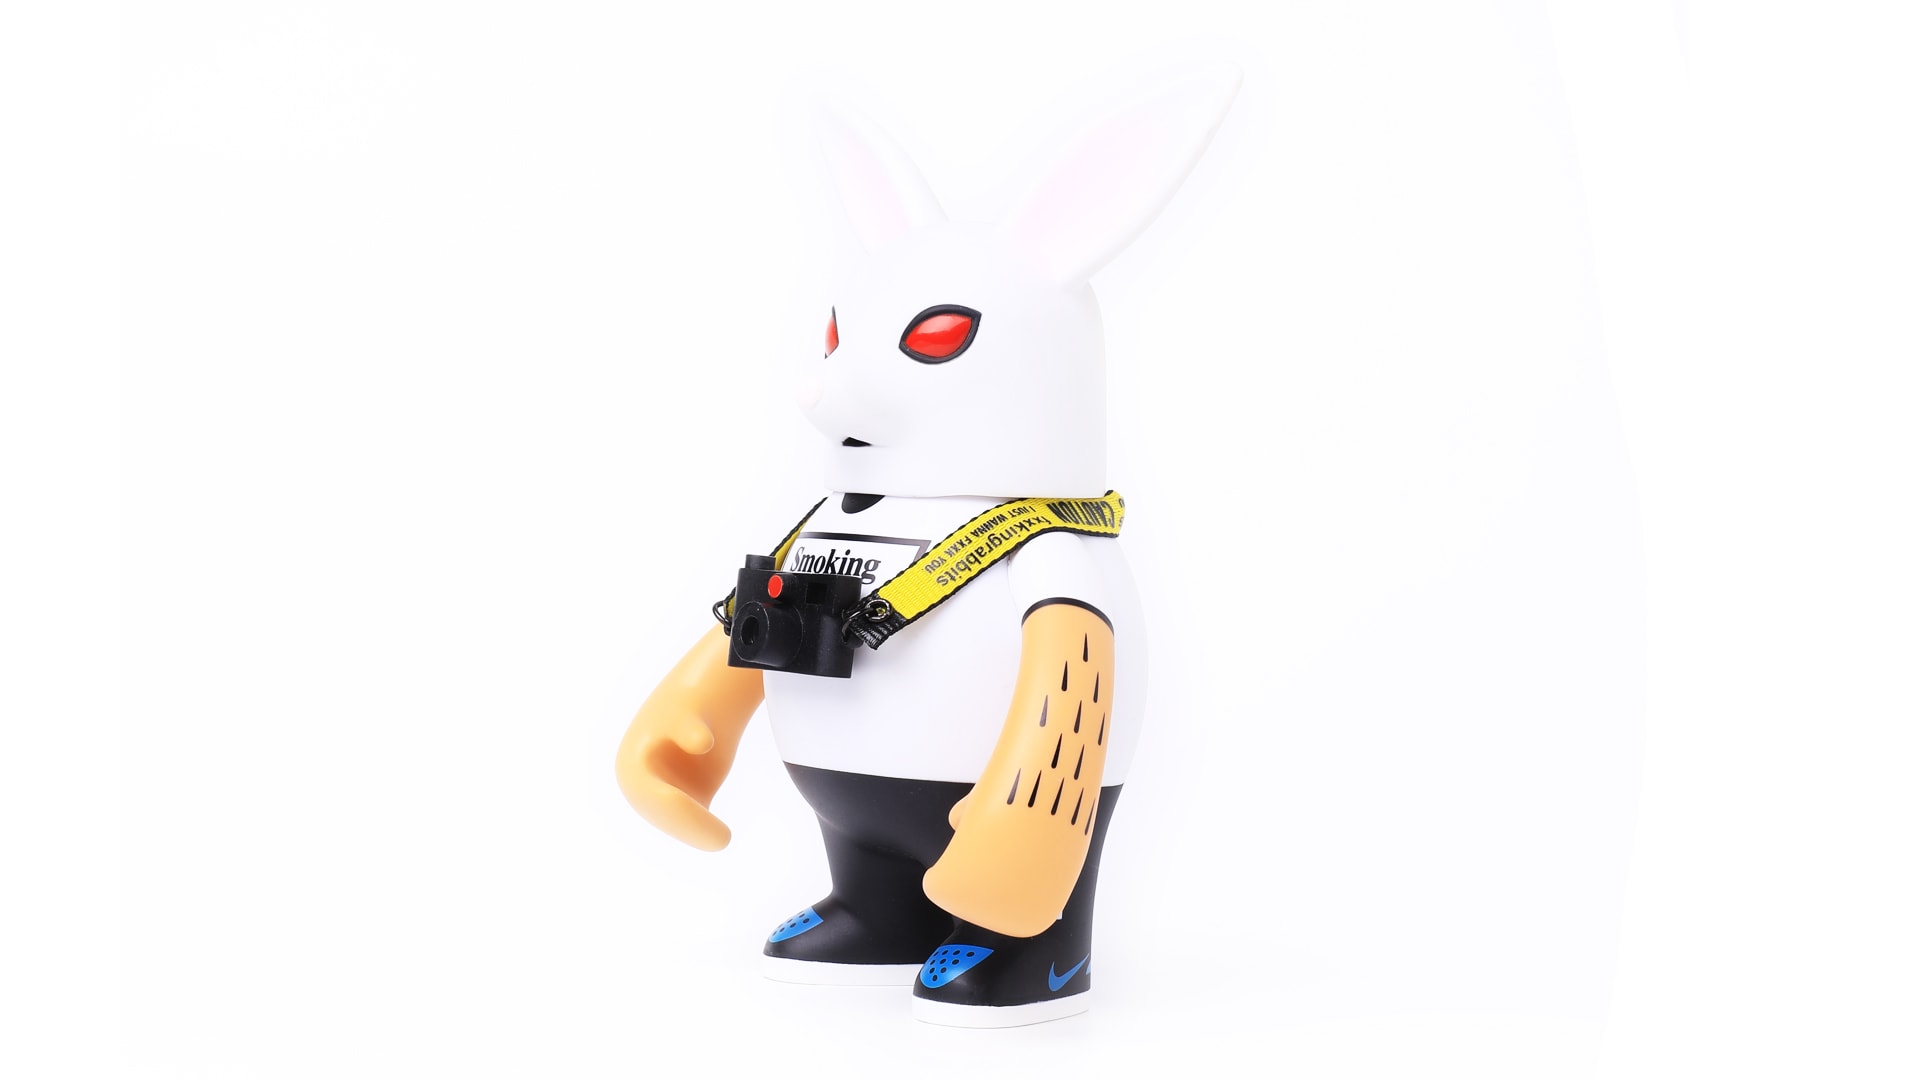 Fxxking Rabbits x FATKO 联名限定搪胶公仔即将在日本发售